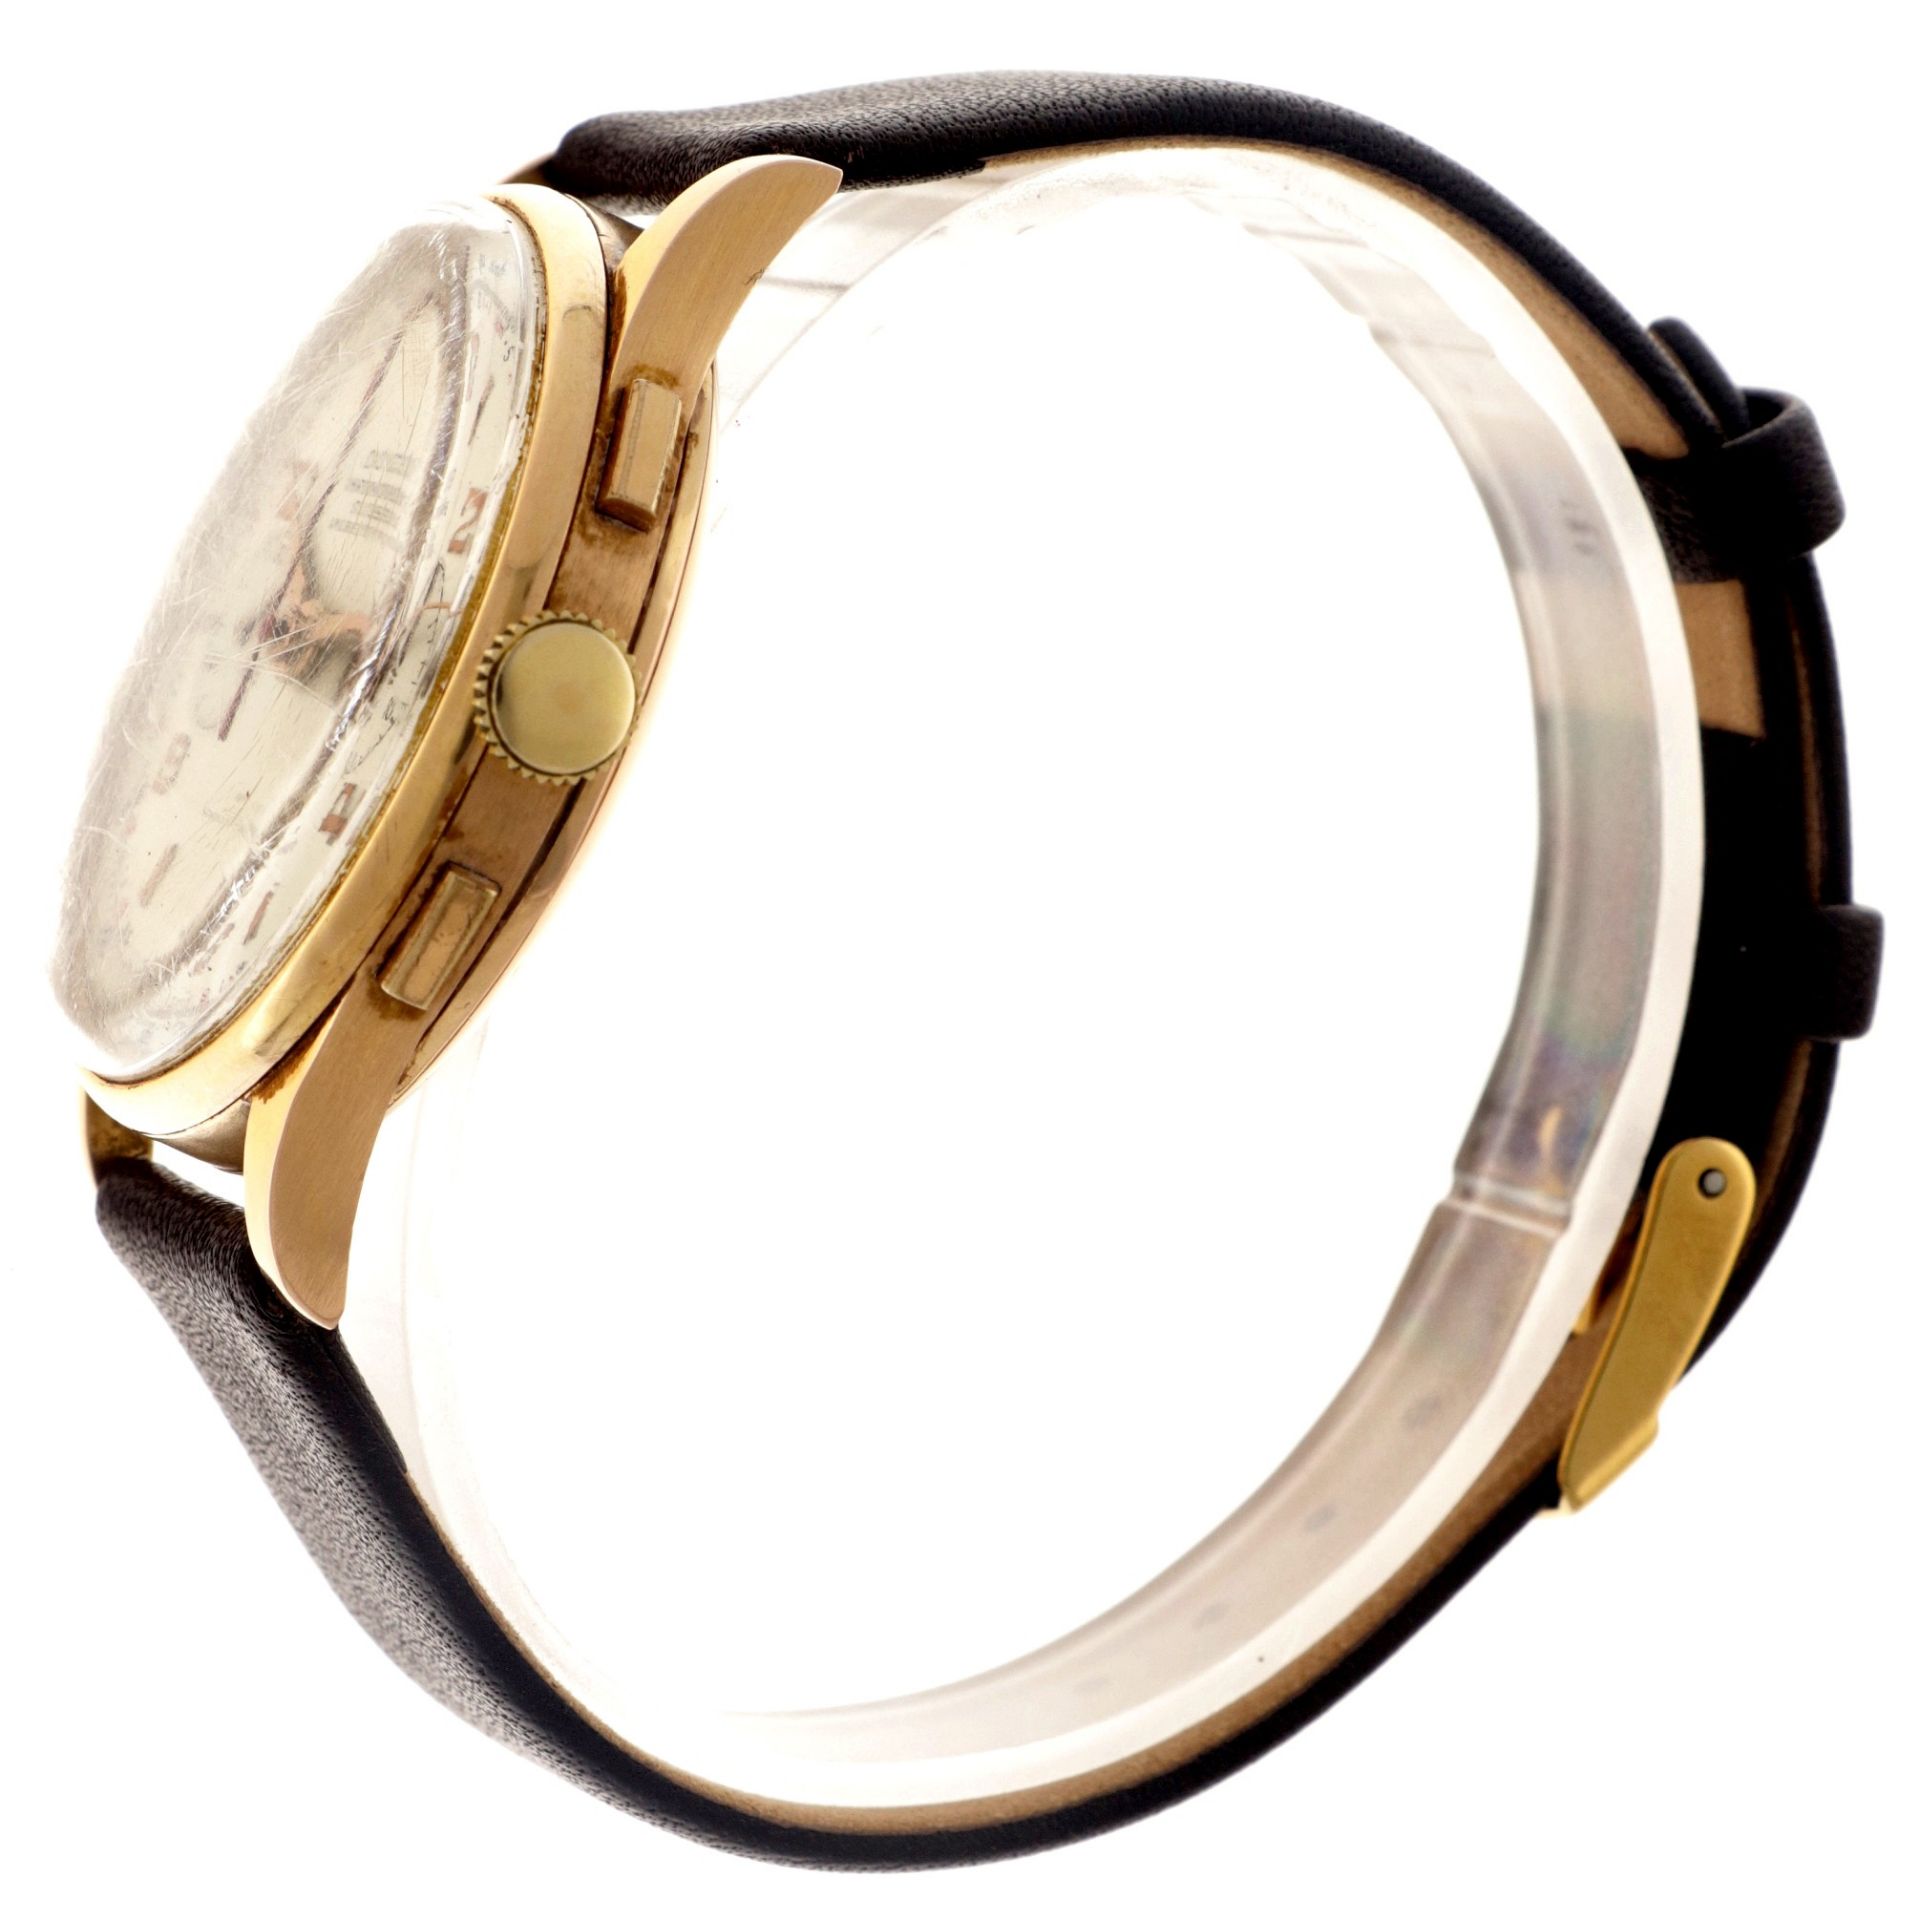 No Reserve - Docker Chronograph Suisse - Men's watch.  - Image 5 of 7